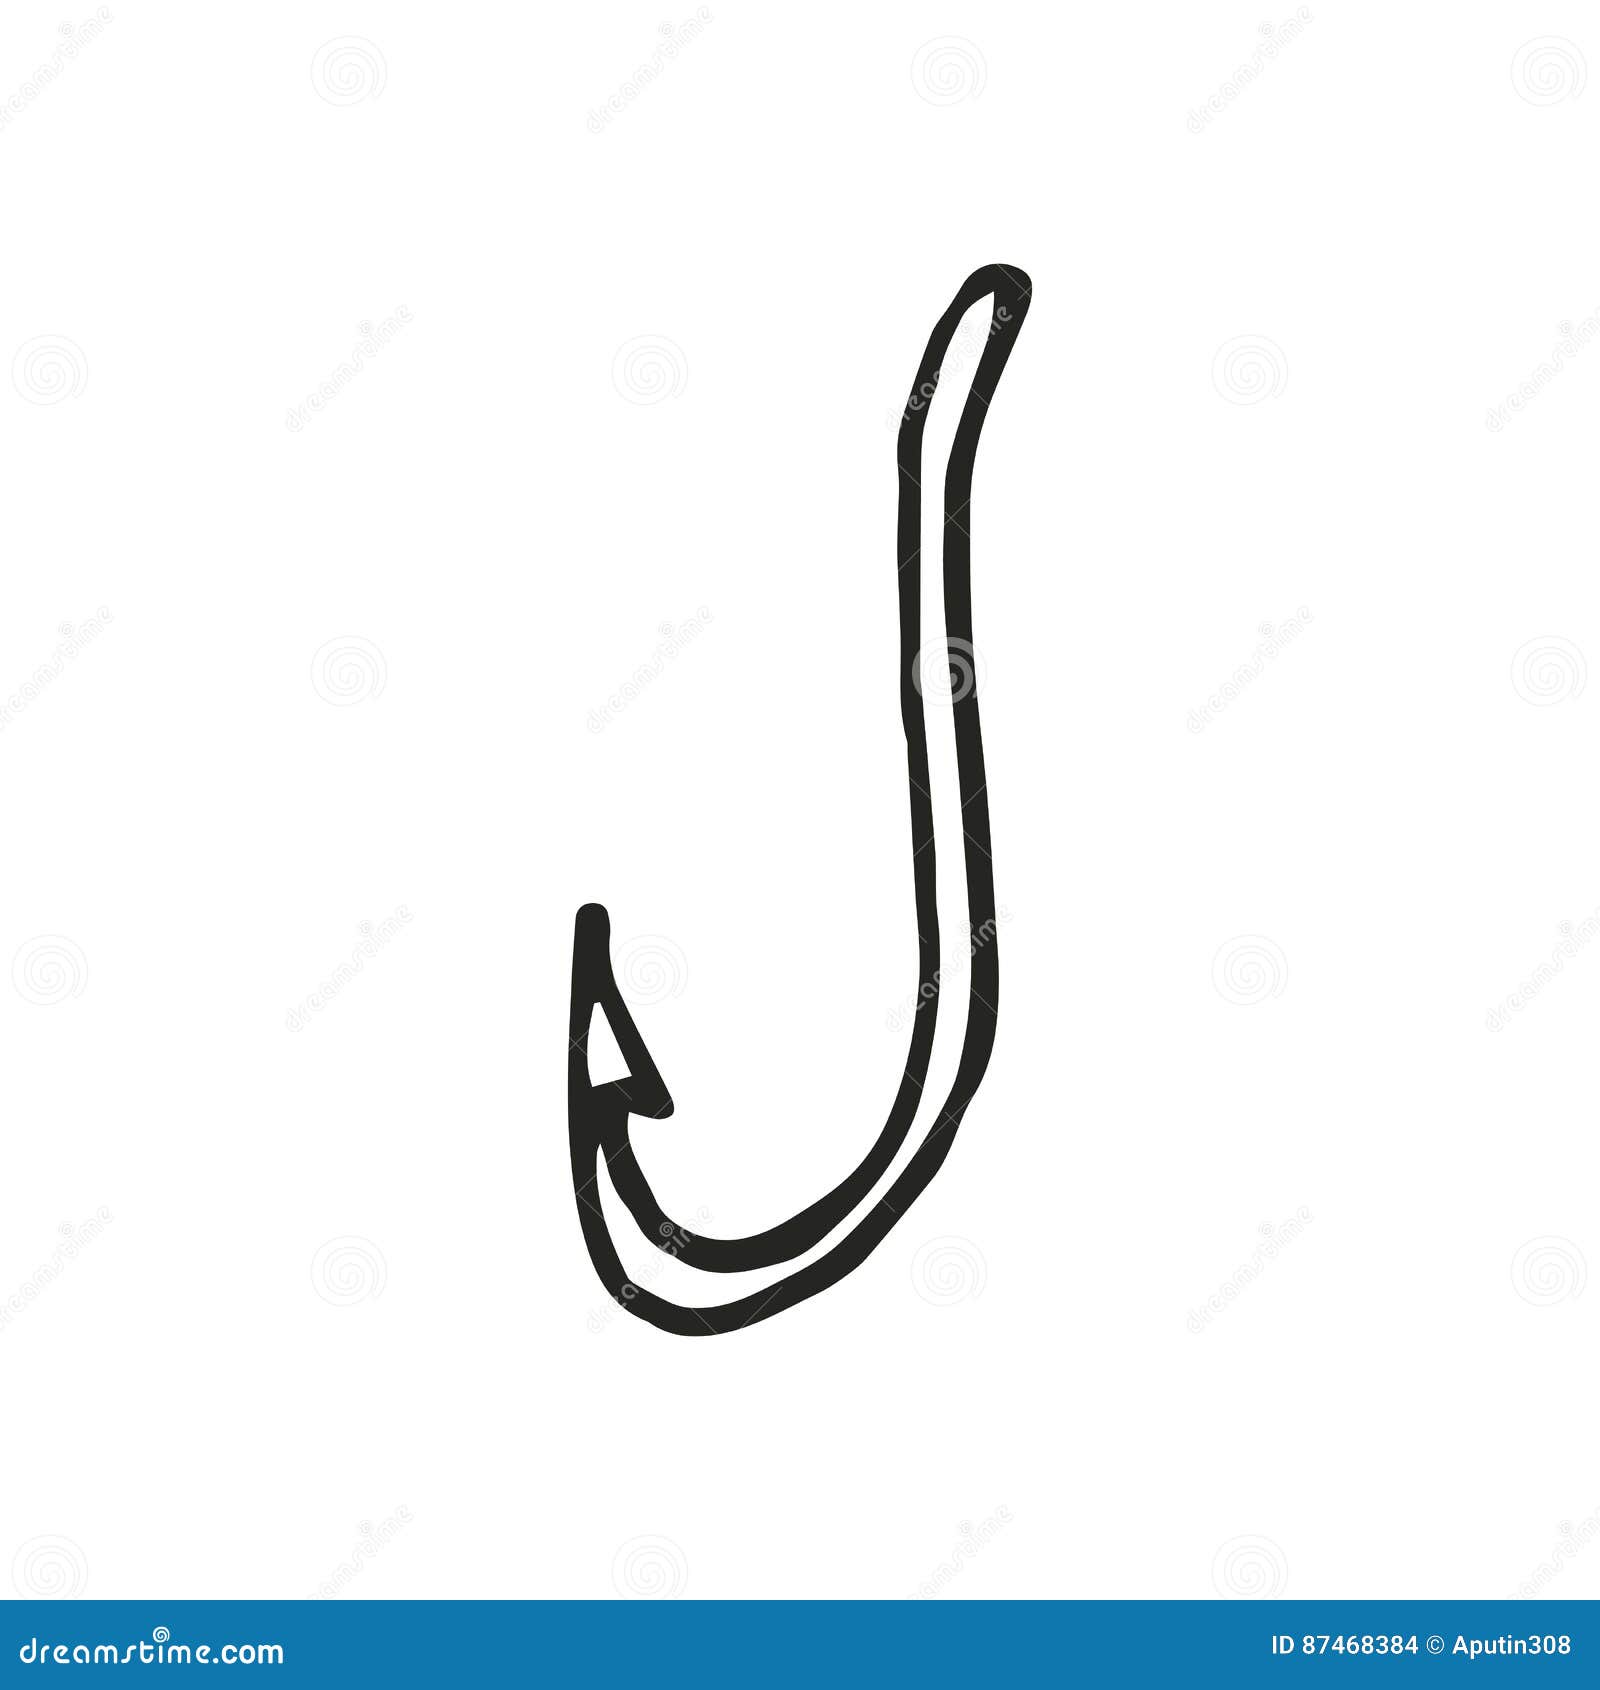 Fishing Hook sketch stock illustration. Illustration of catch - 87468384